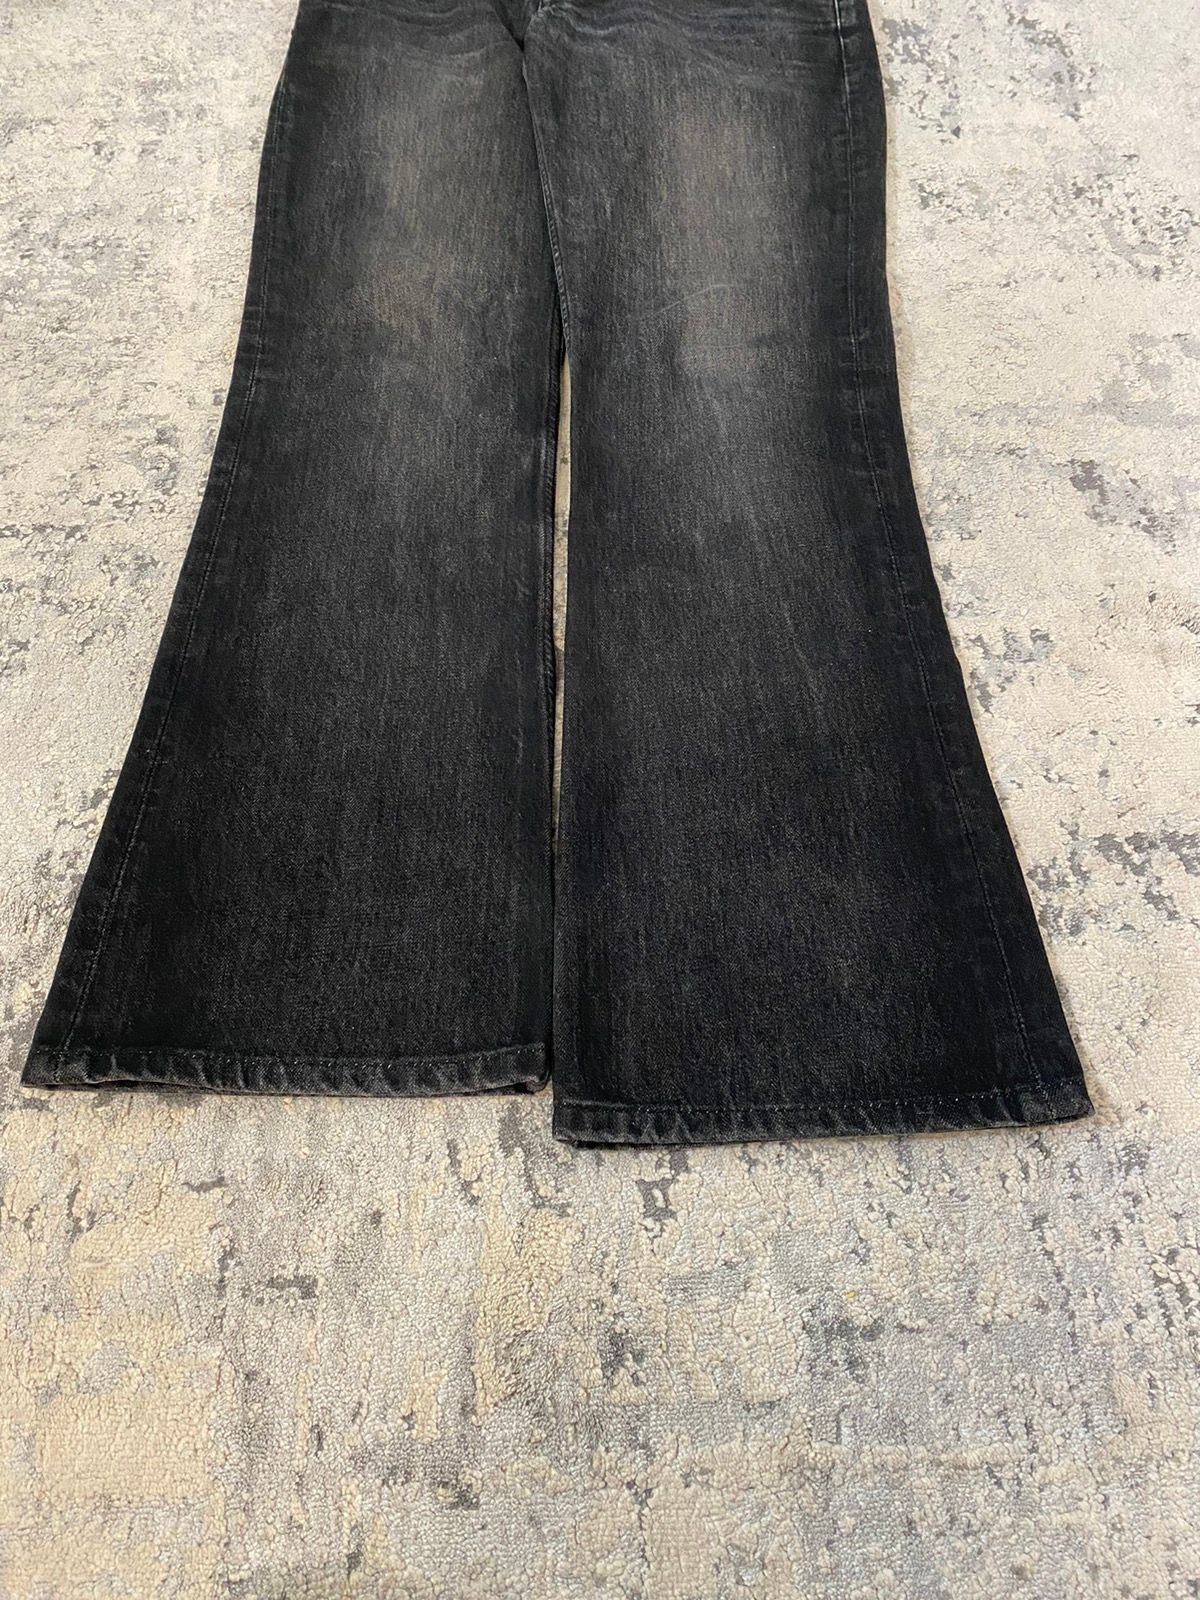 Shellac [SOLD]Shellac Faded Black Bootcut Jeans Size US 30 / EU 46 - 5 Thumbnail